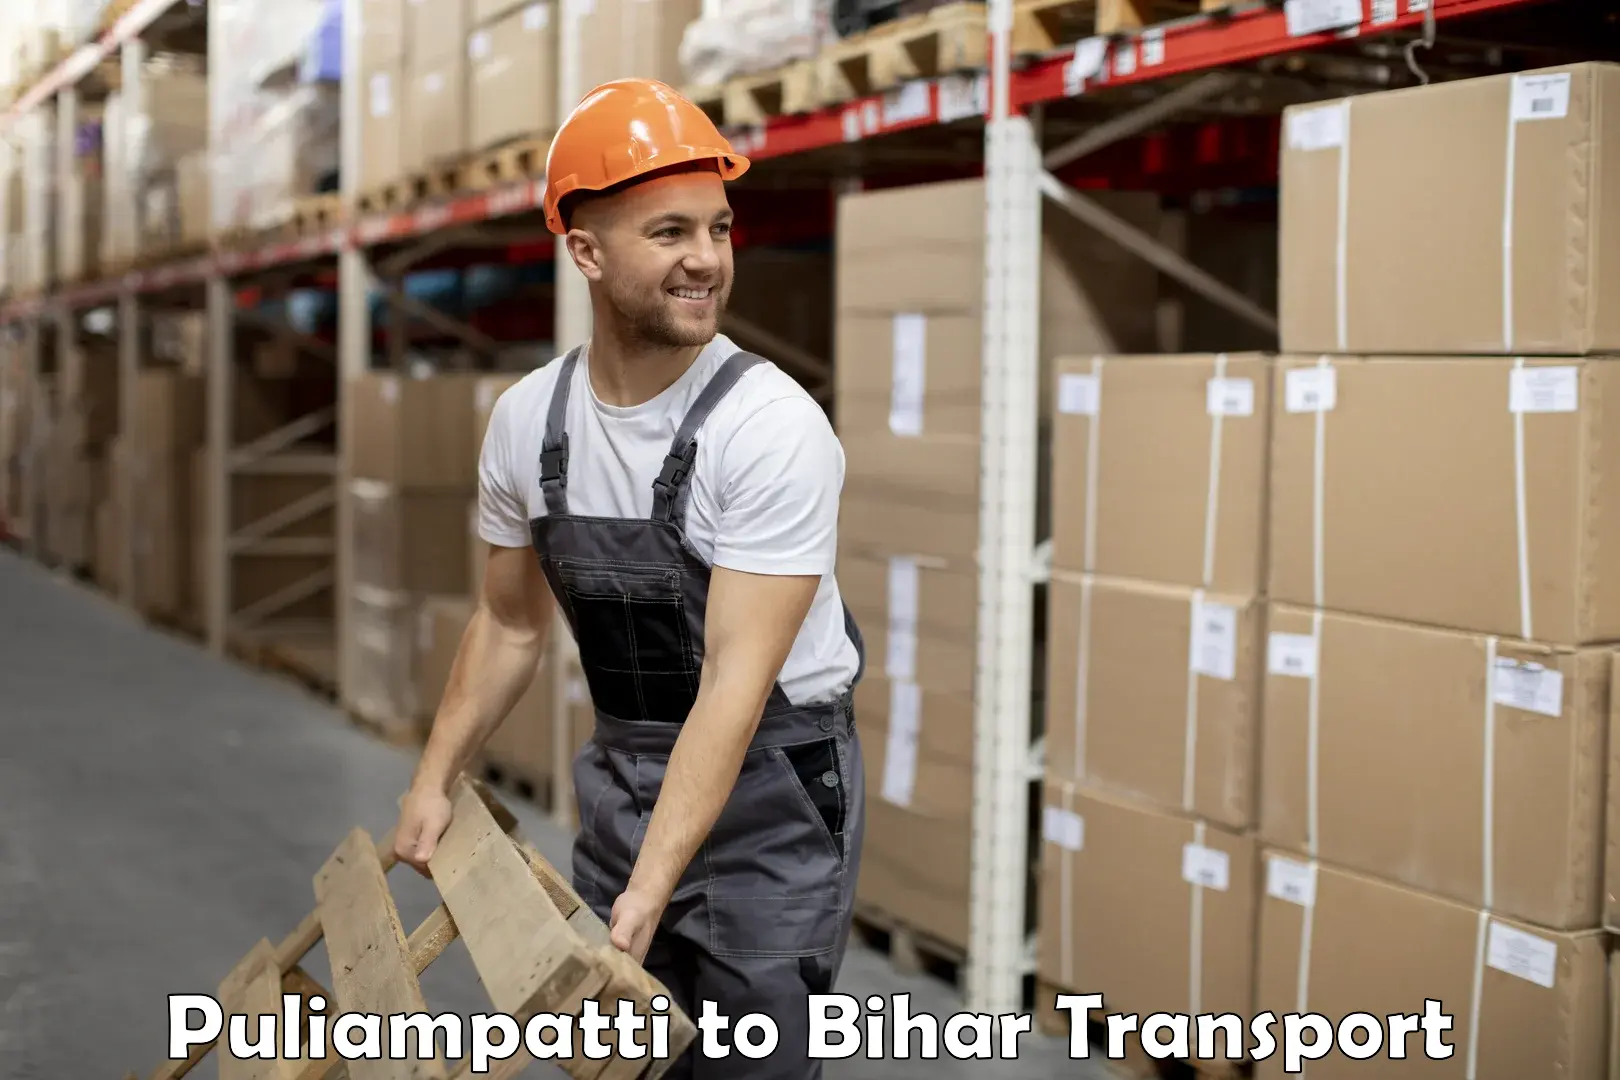 Truck transport companies in India Puliampatti to Bihar